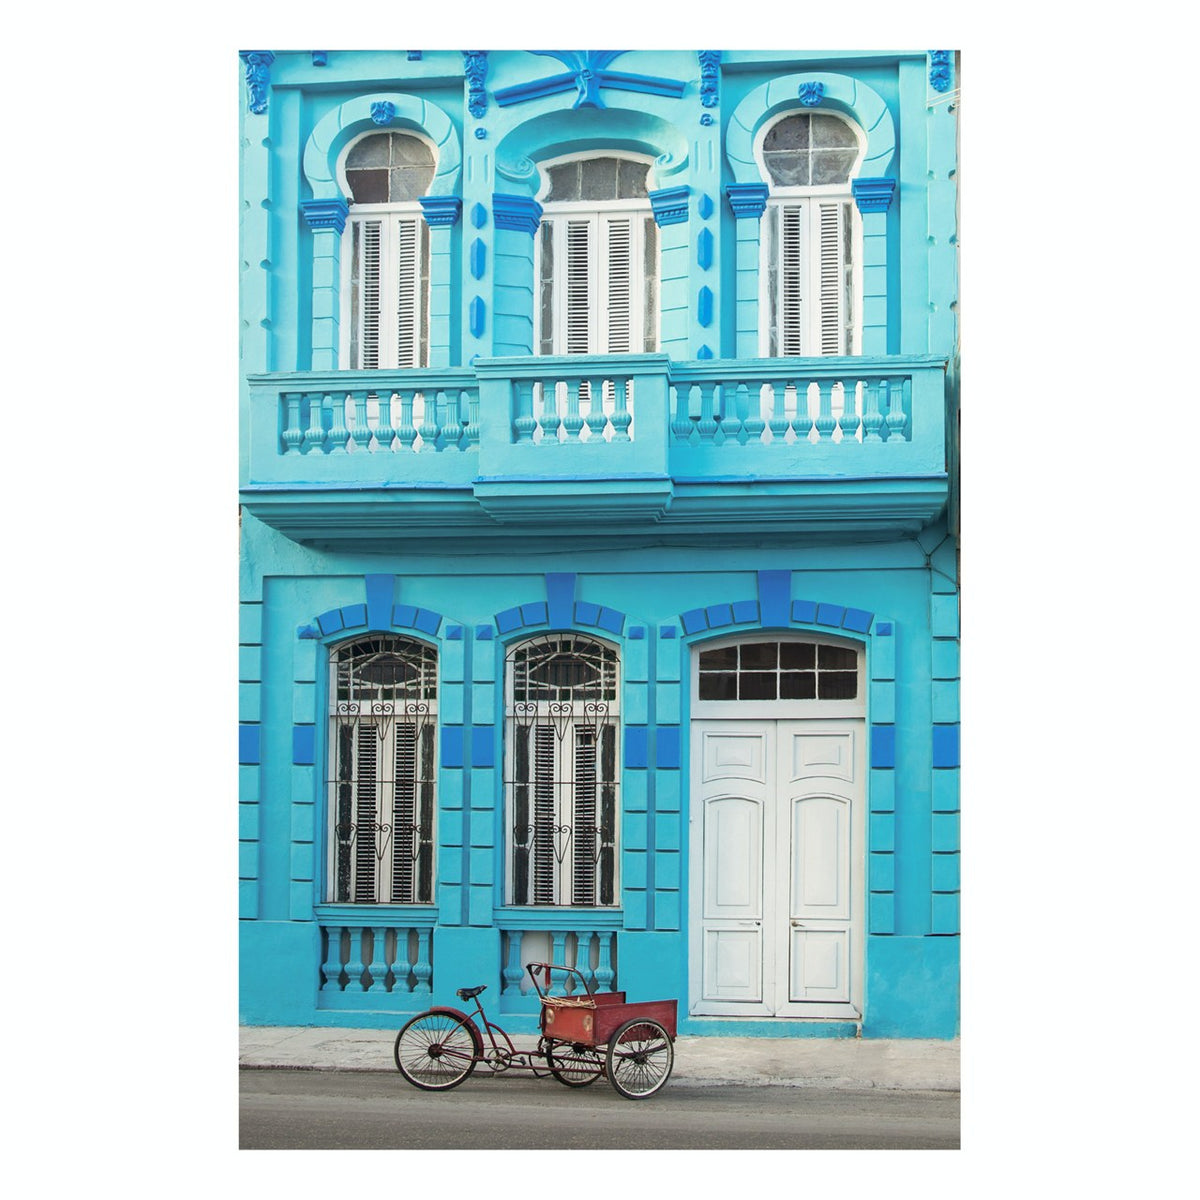 Fine Art Prints - "Typical Cuban Bicitaxi" | Travel Photography Prints